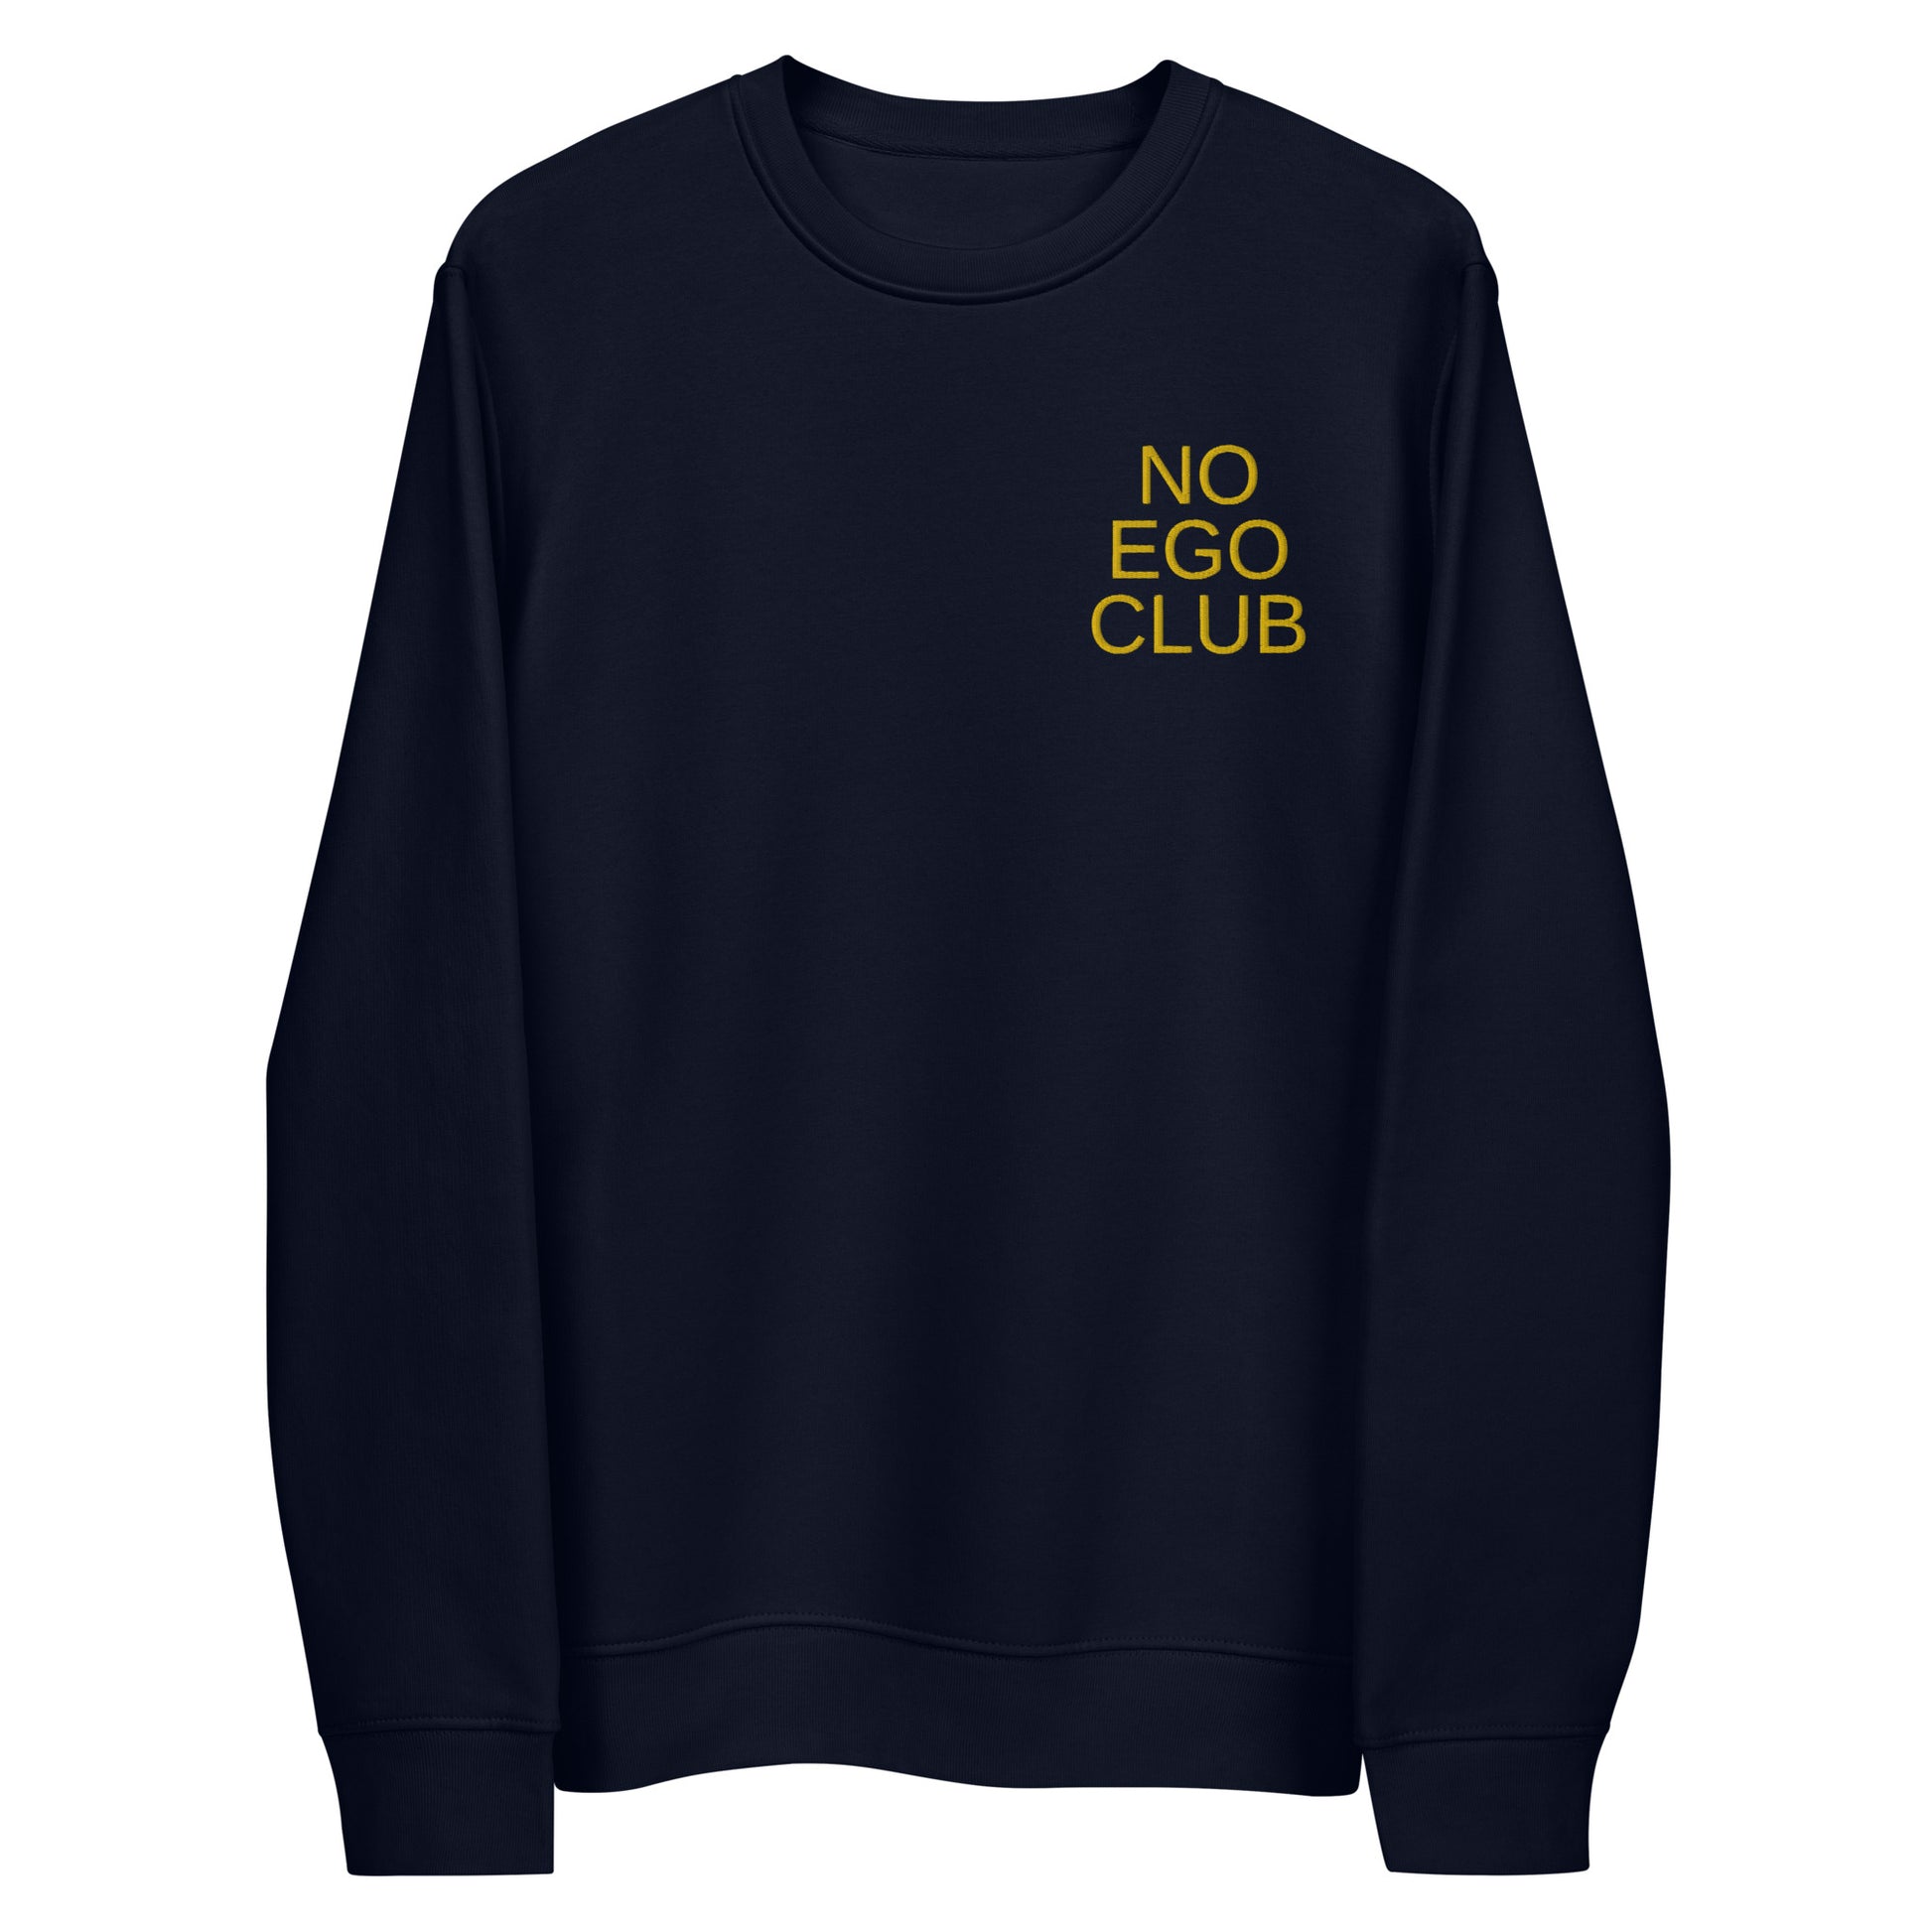 No Ego Club sweatshirt blue navy unisex. Clothes With Words apparel.